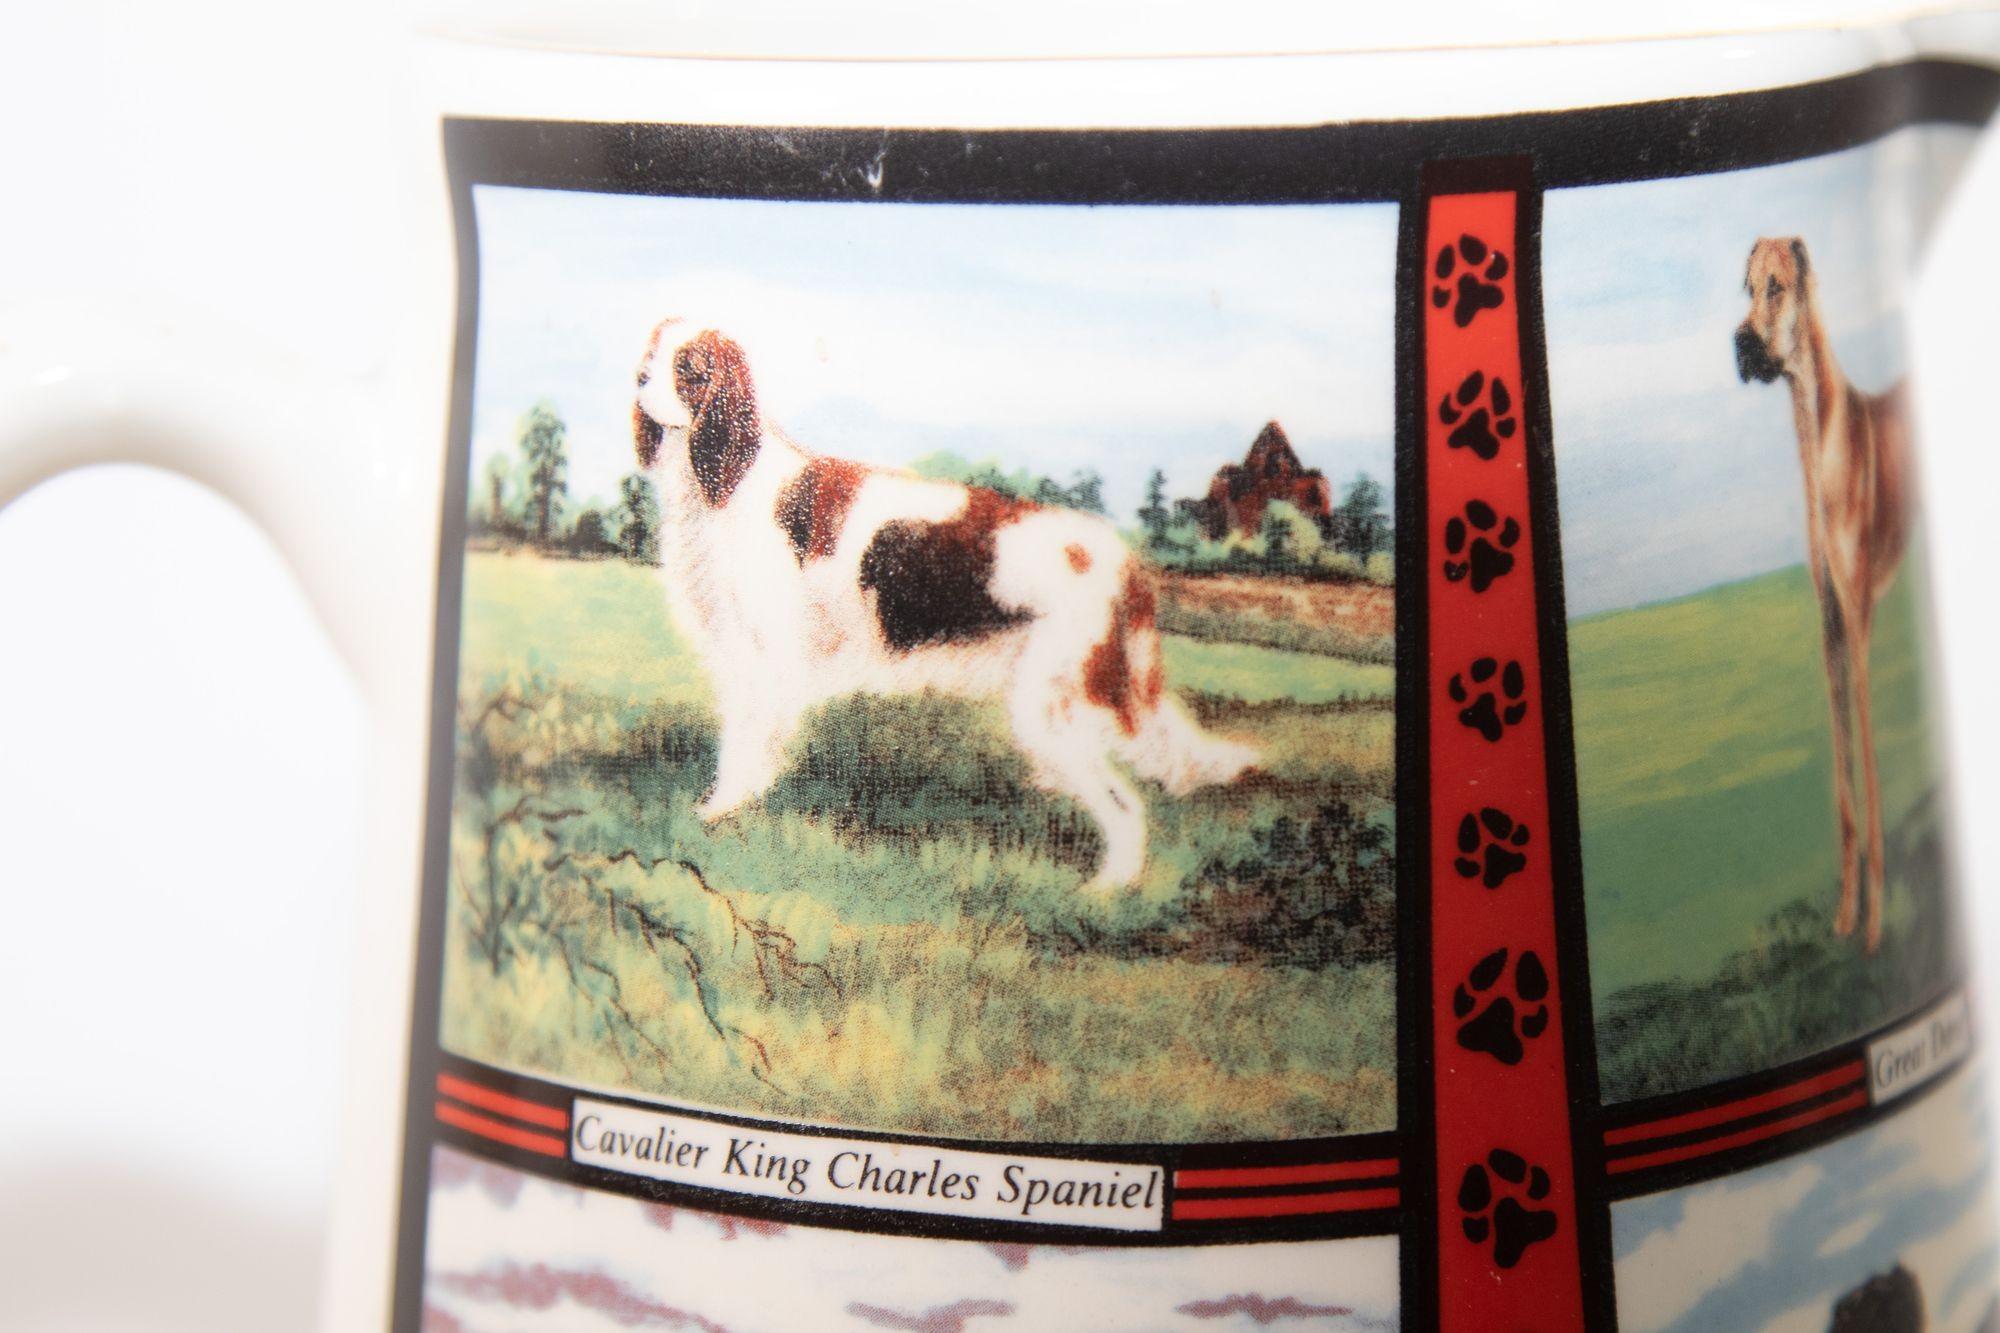 Vintage 1970s Ceramic Pitcher, Derbyshire England with Dog Breeds Pictures For Sale 1